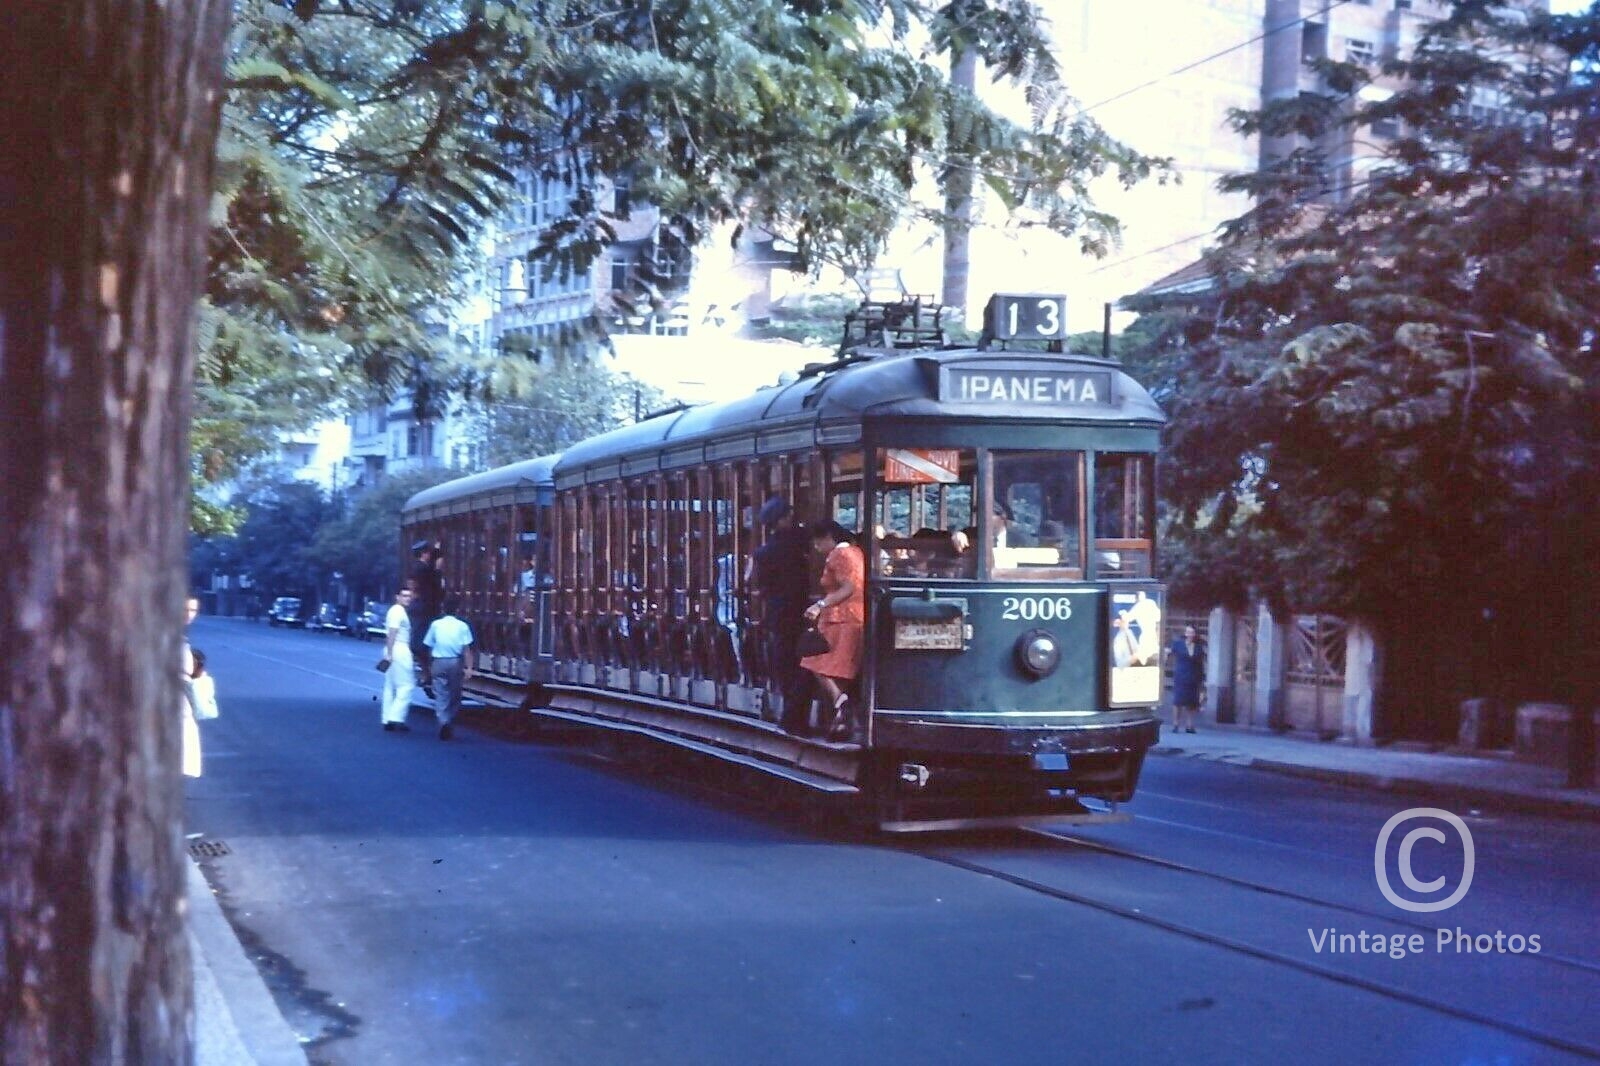 1950s South American Street Tram - Ipanema